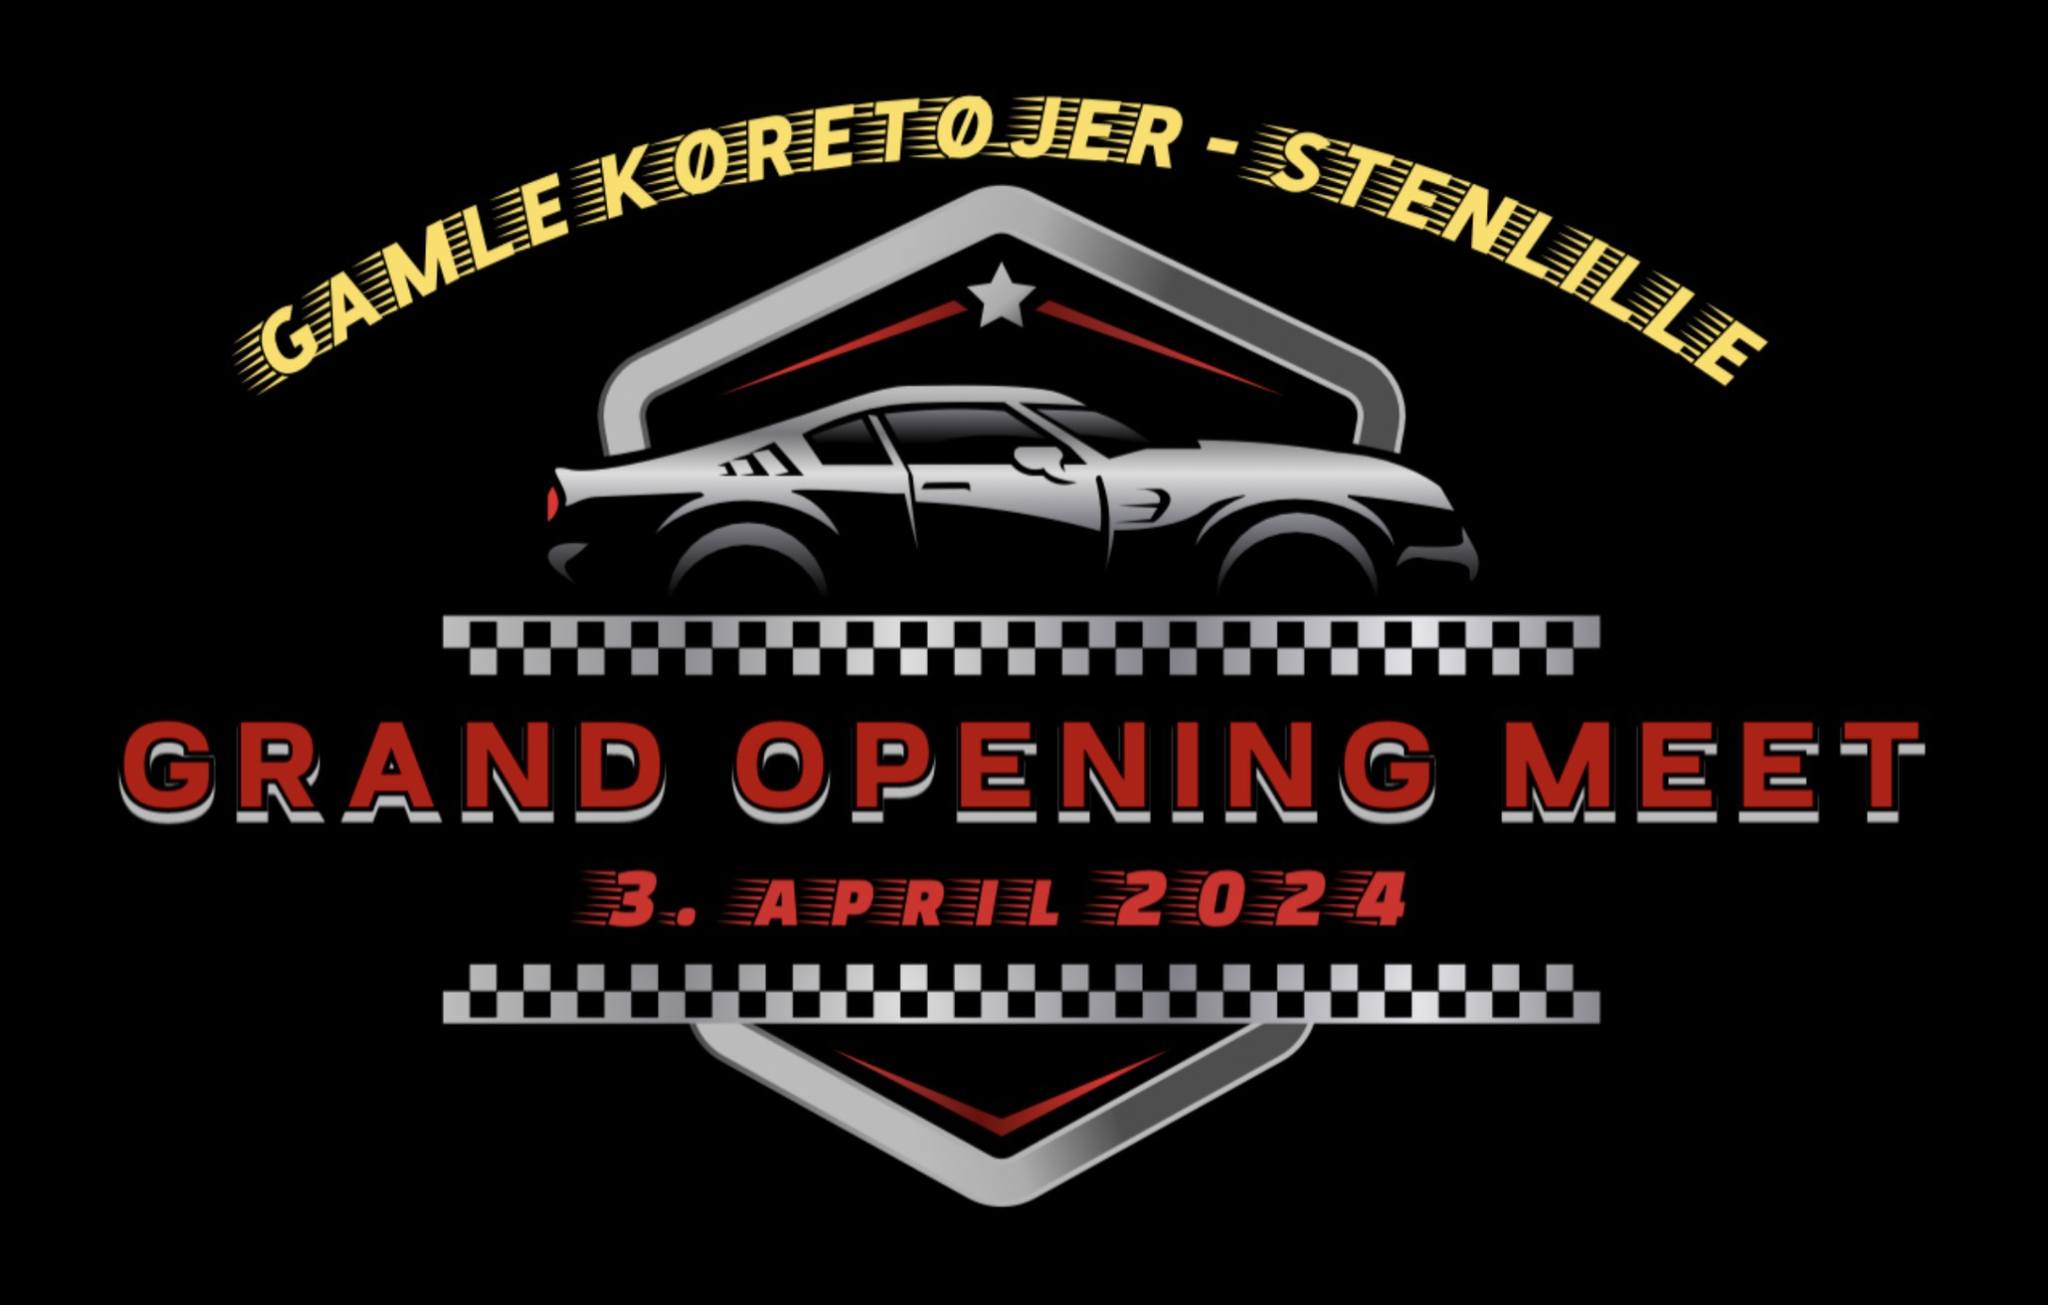 Grand Opening Meet - Stenlille - Racelens